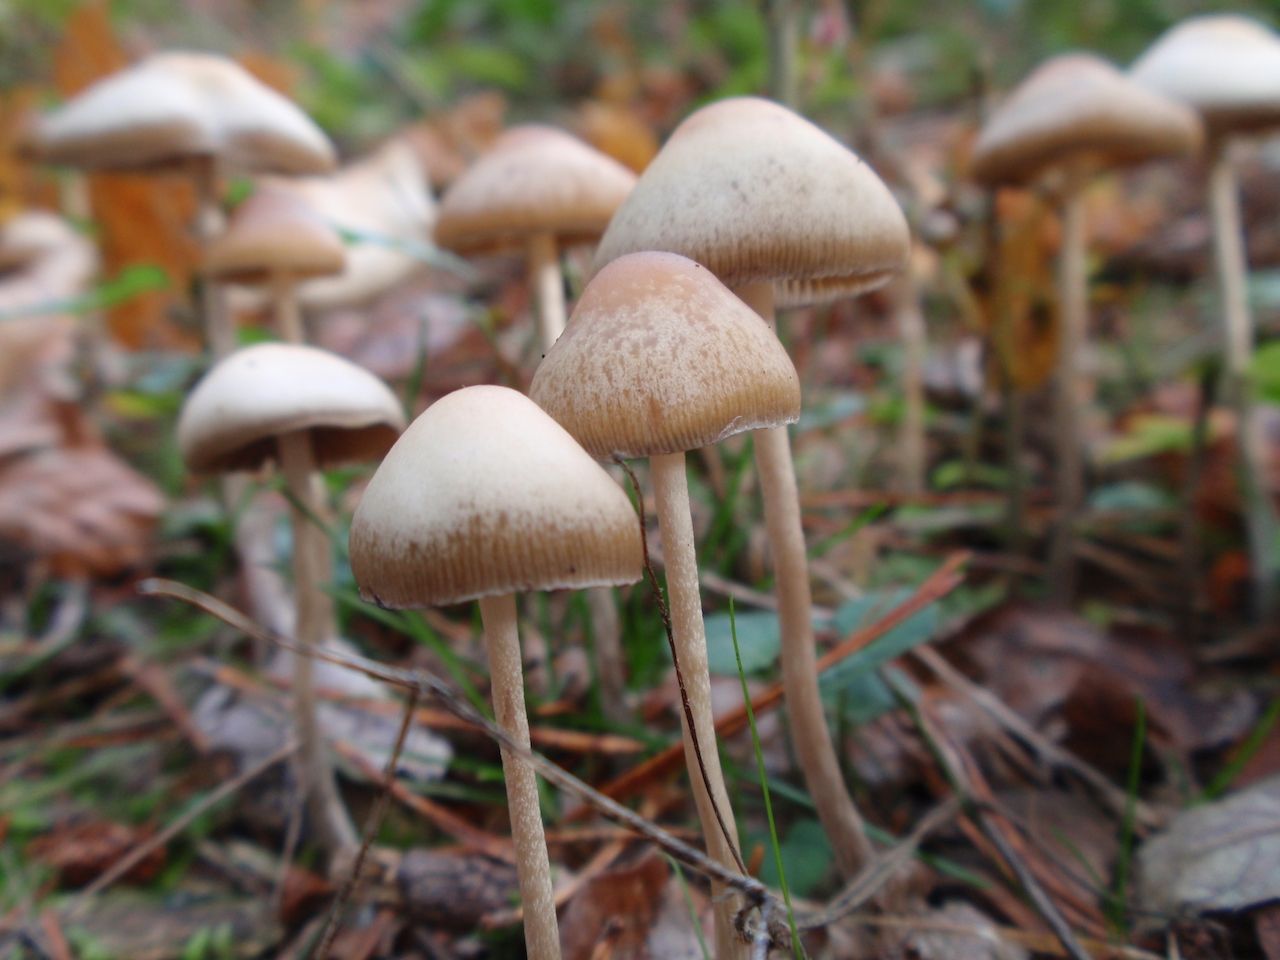 Describing Edible Wild Mushrooms and Tips On Handling